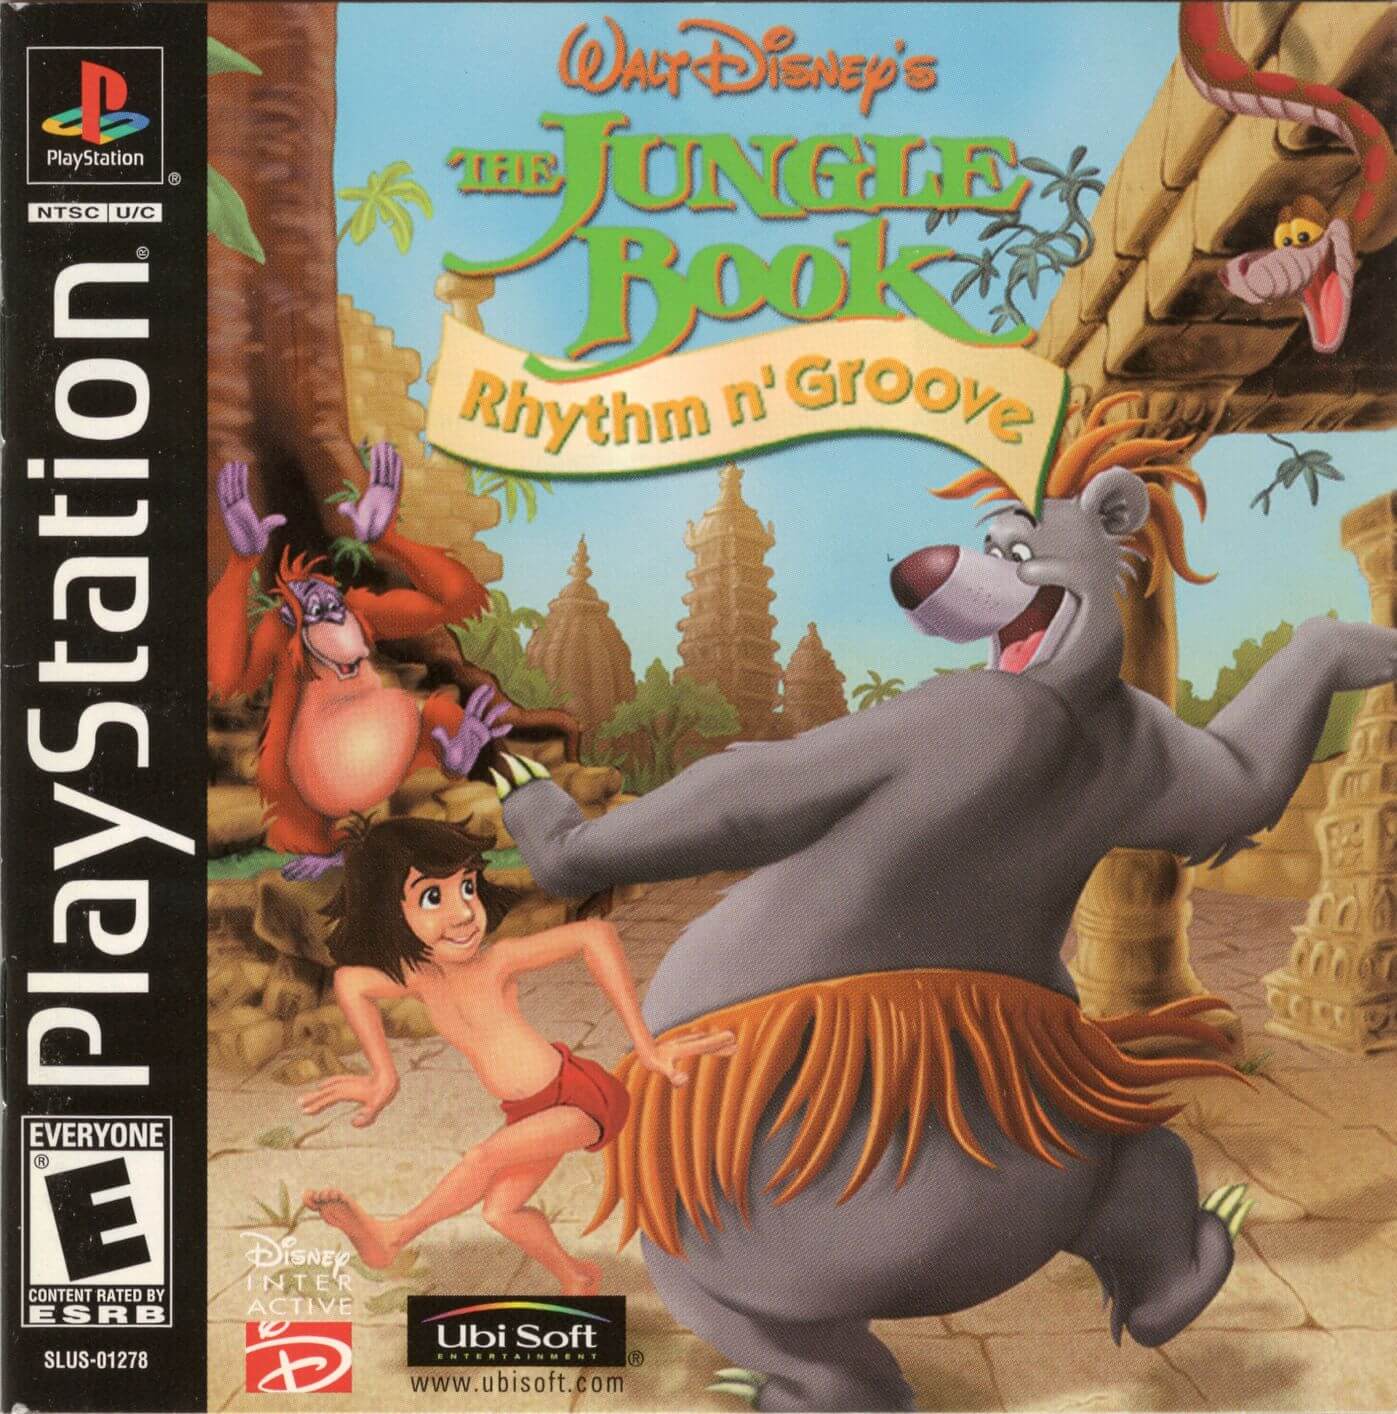 Walt Disney's The Jungle Book: Rhythm n' Groove Party